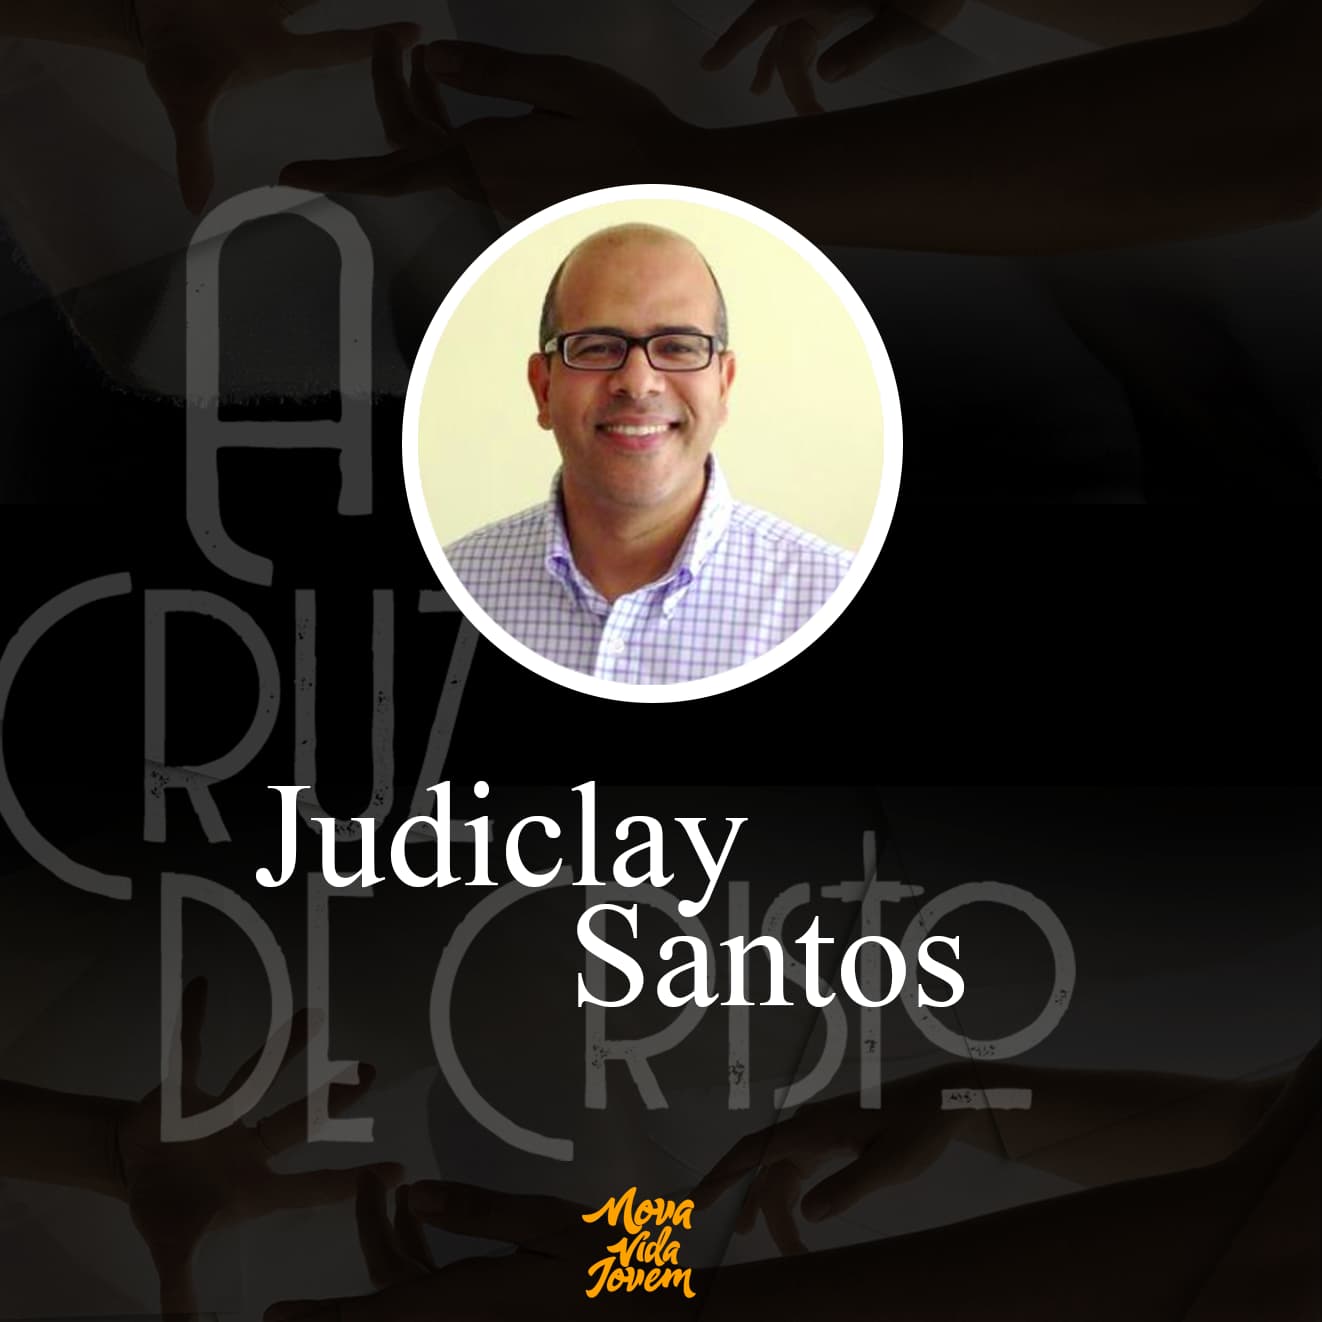 Pr. Judiclay Santos